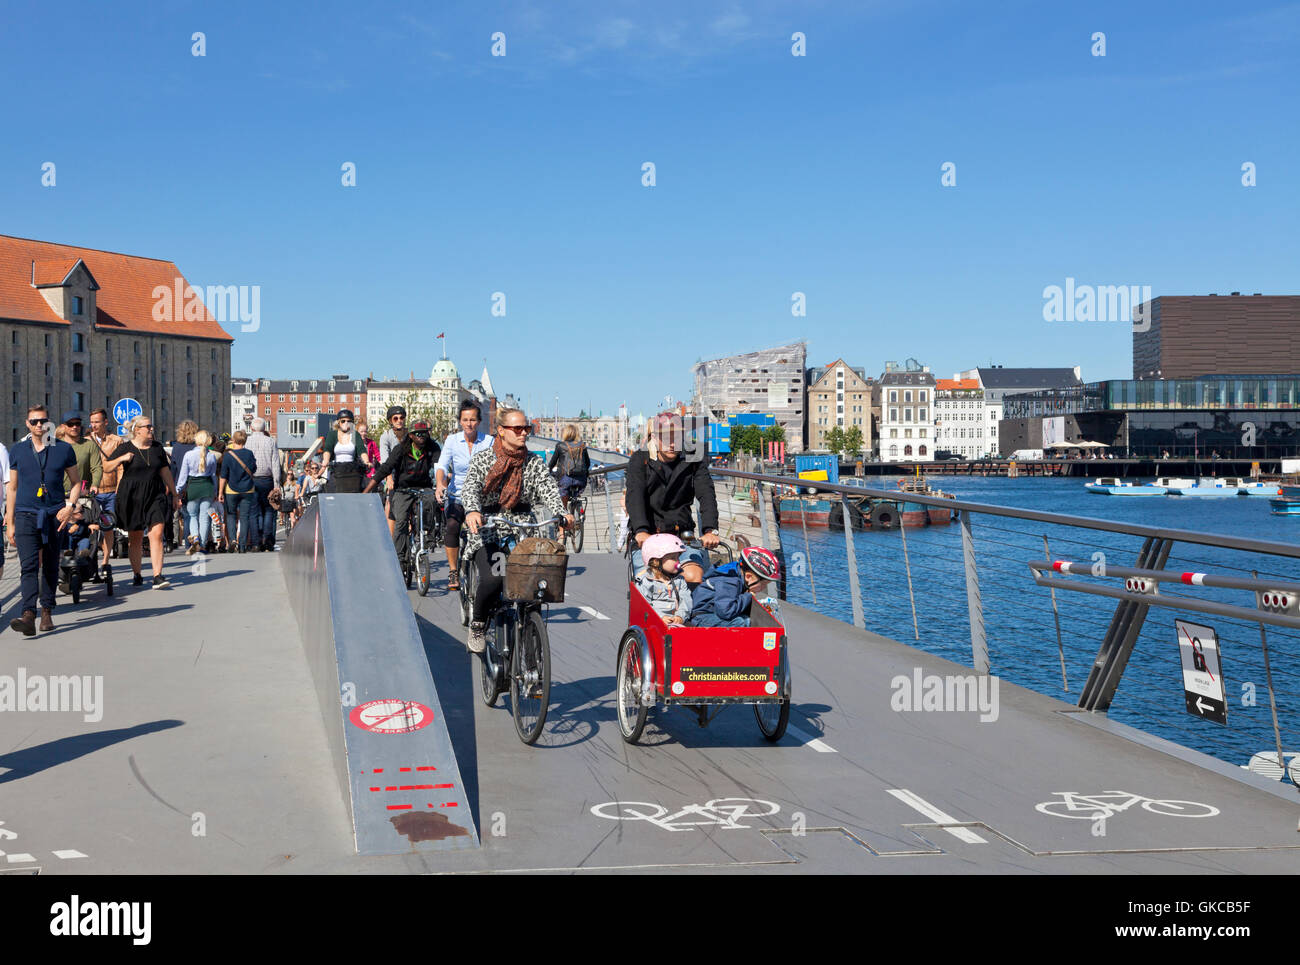 Cyclists and pedestrians on the Trangrav Bridge, Trangravsbroen. Copenhagen, Denmark. Part of the Harbour Circle. Cyclers cycler. Bridges. Stock Photo